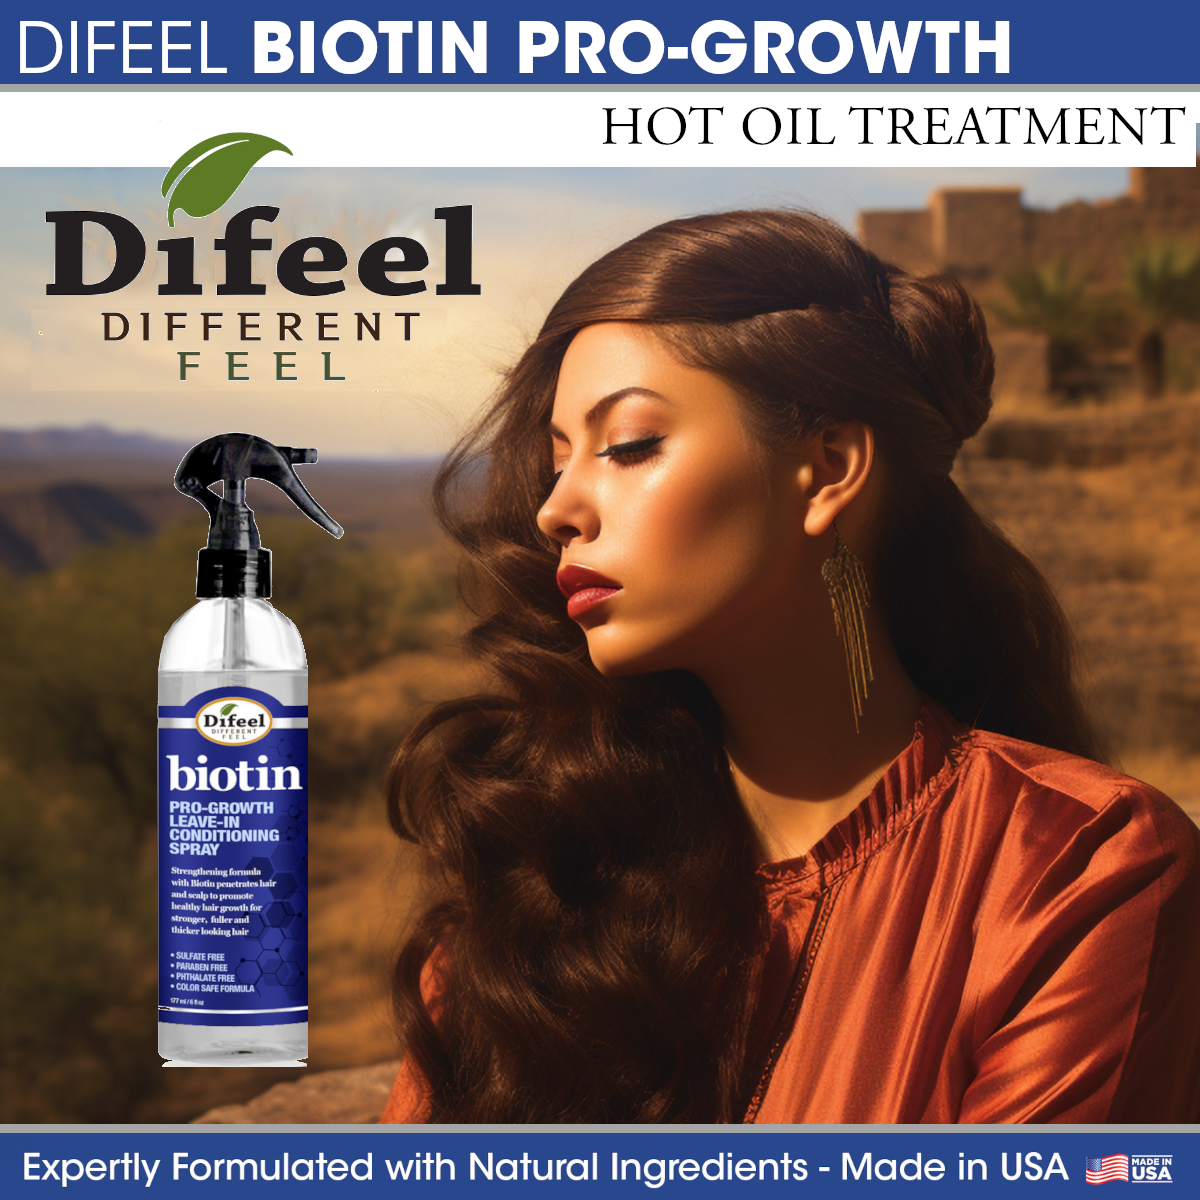 Difeel Biotin Pro-Growth Leave in Conditioning Spray 6 oz.